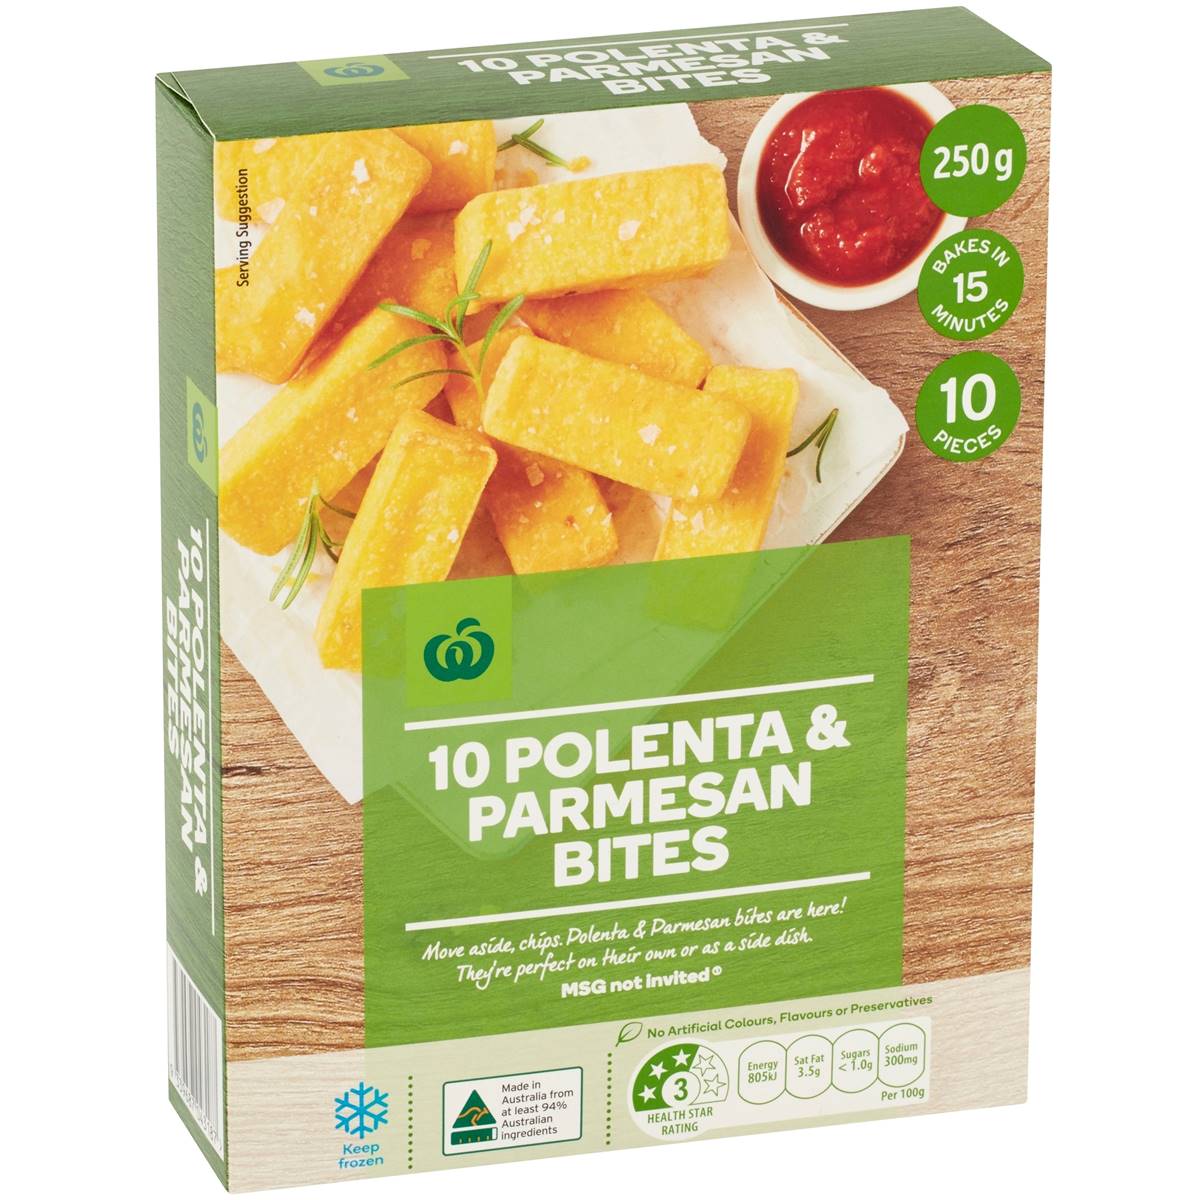 Calories in Woolworths Polenta & Parmesan Chips